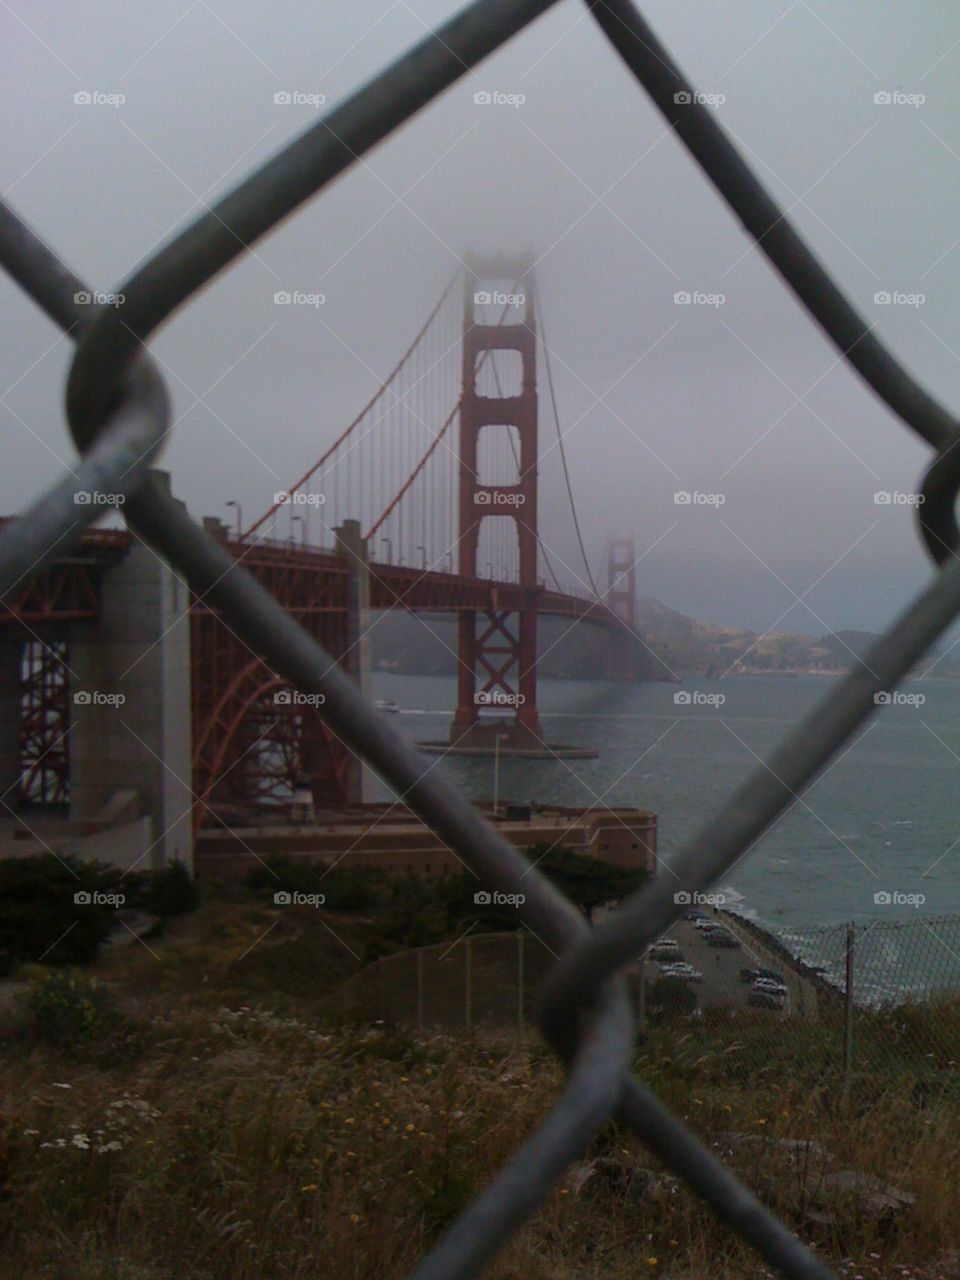 California love. My favorite view of the Golden Gate Bridge through persistent fog.